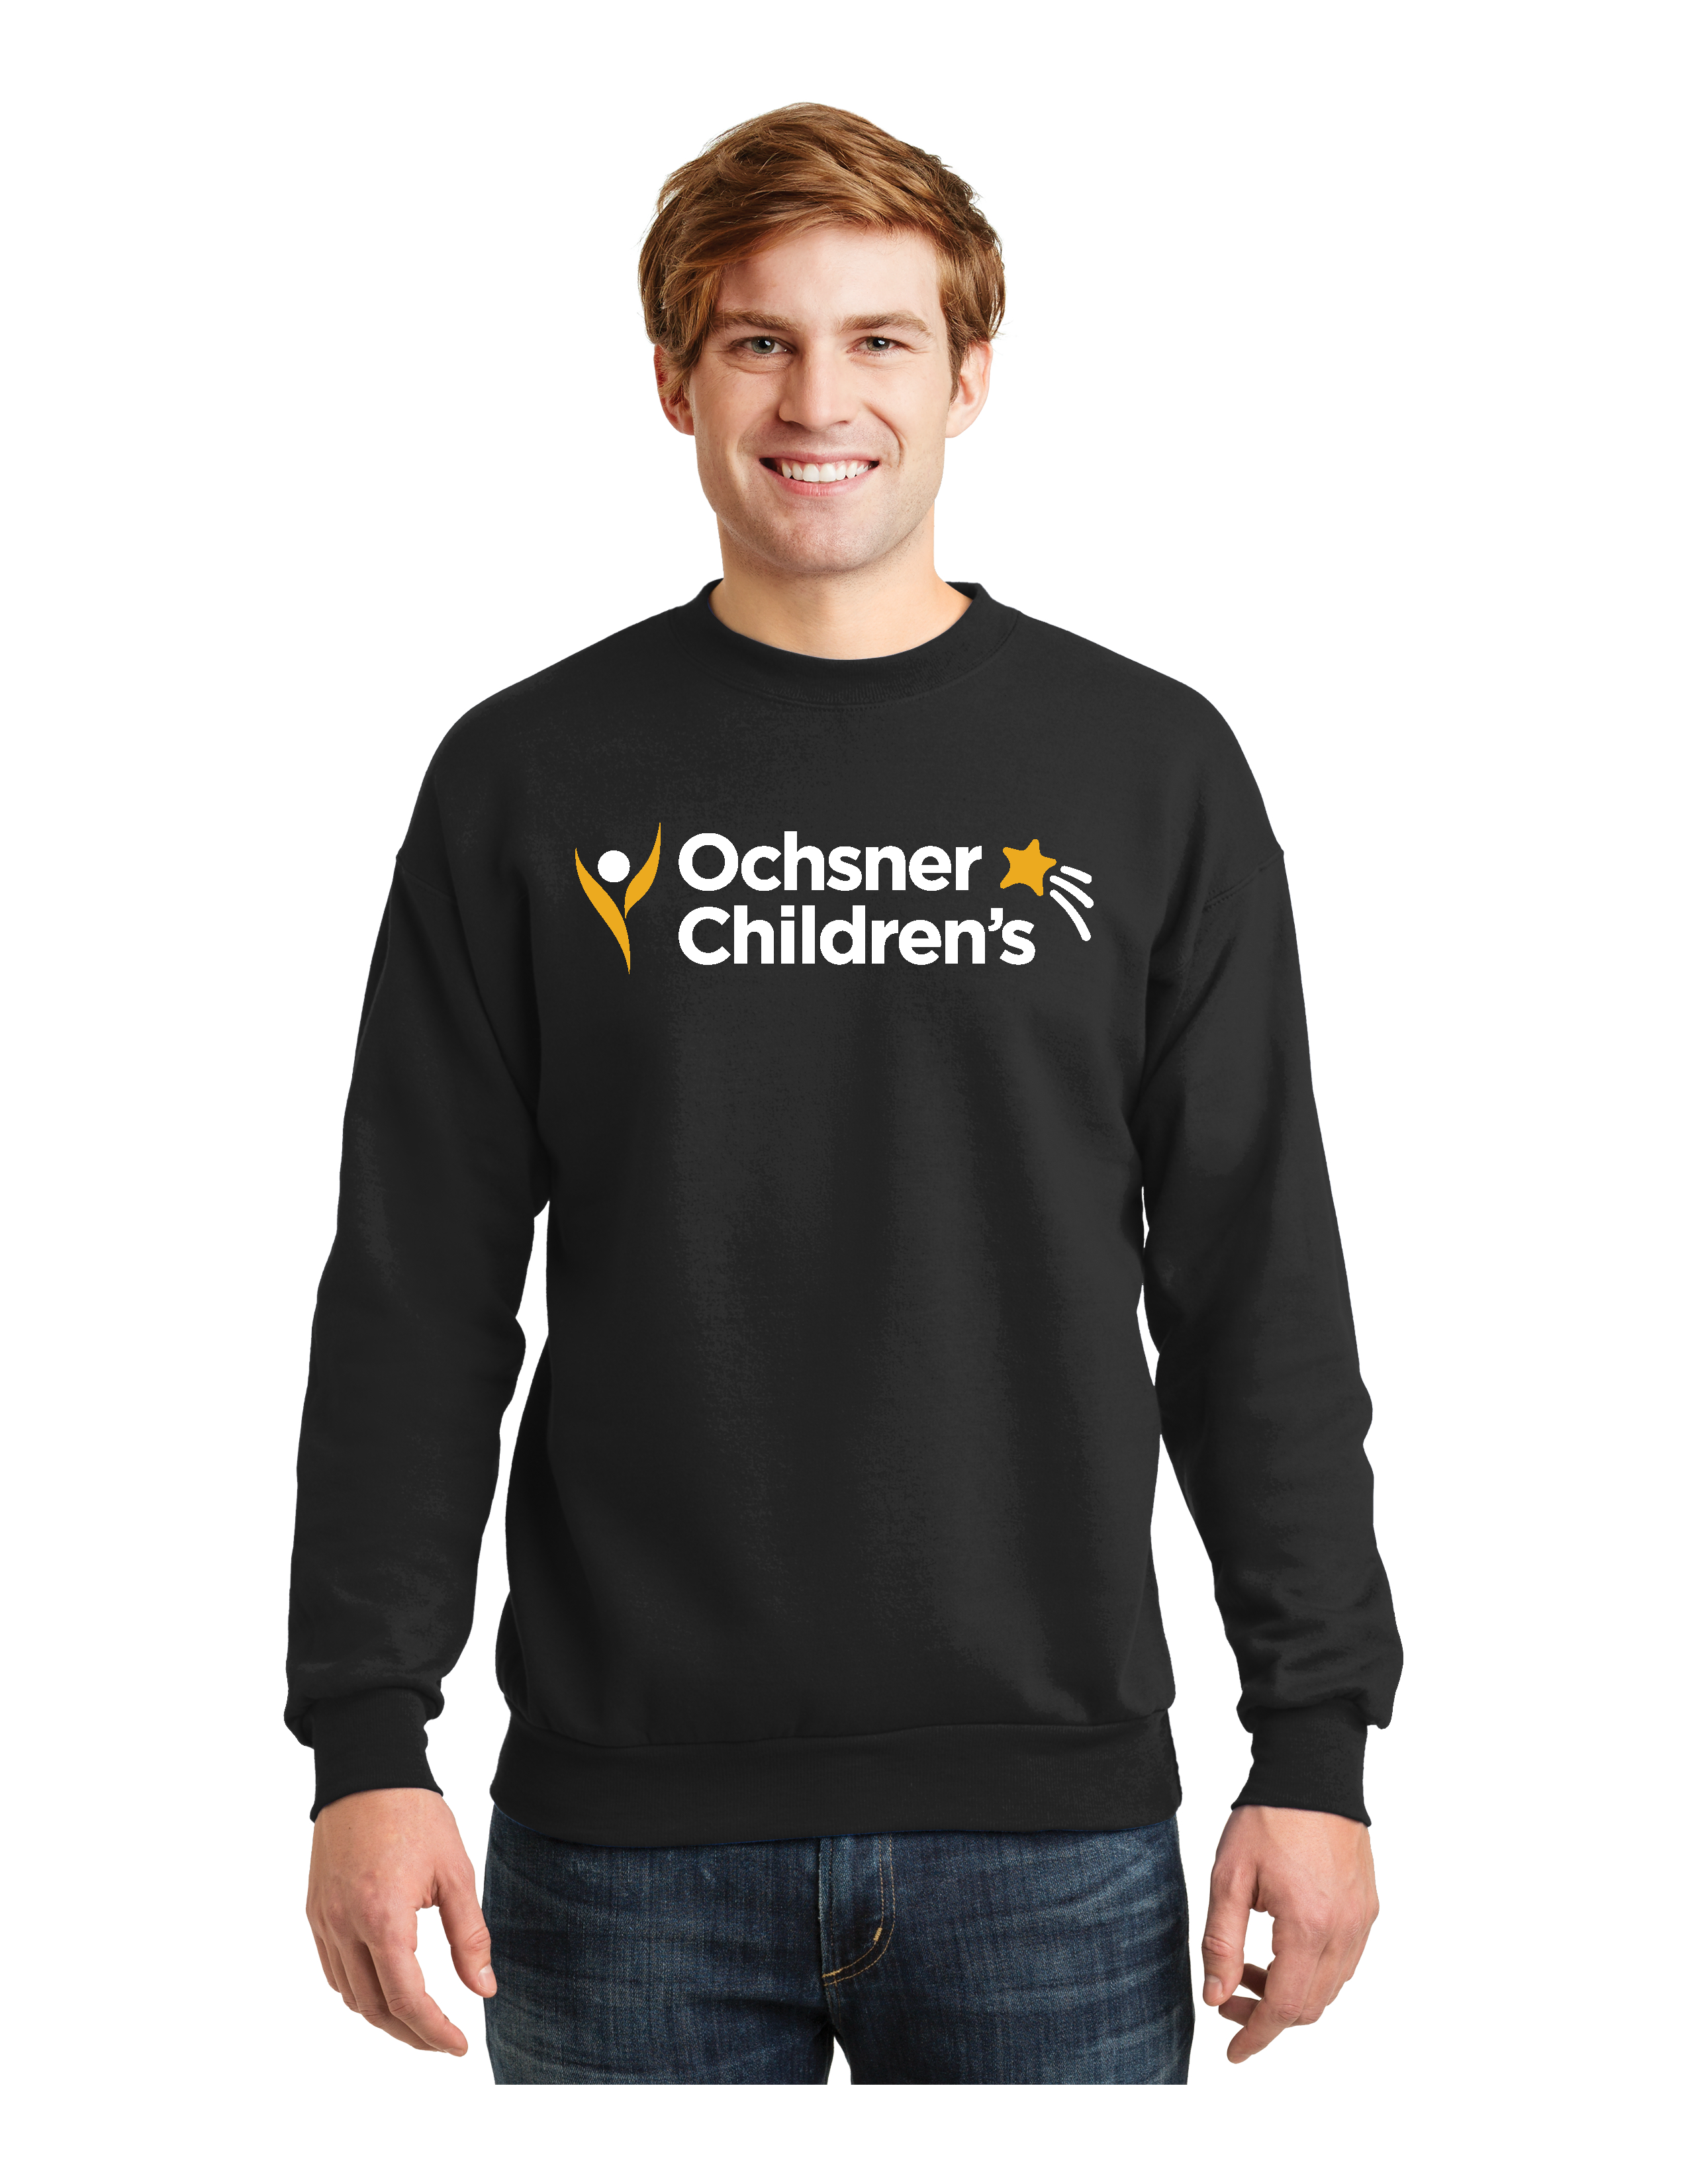 Ochsner Children's Screen-Print Sweatshirt, Black, large image number 1